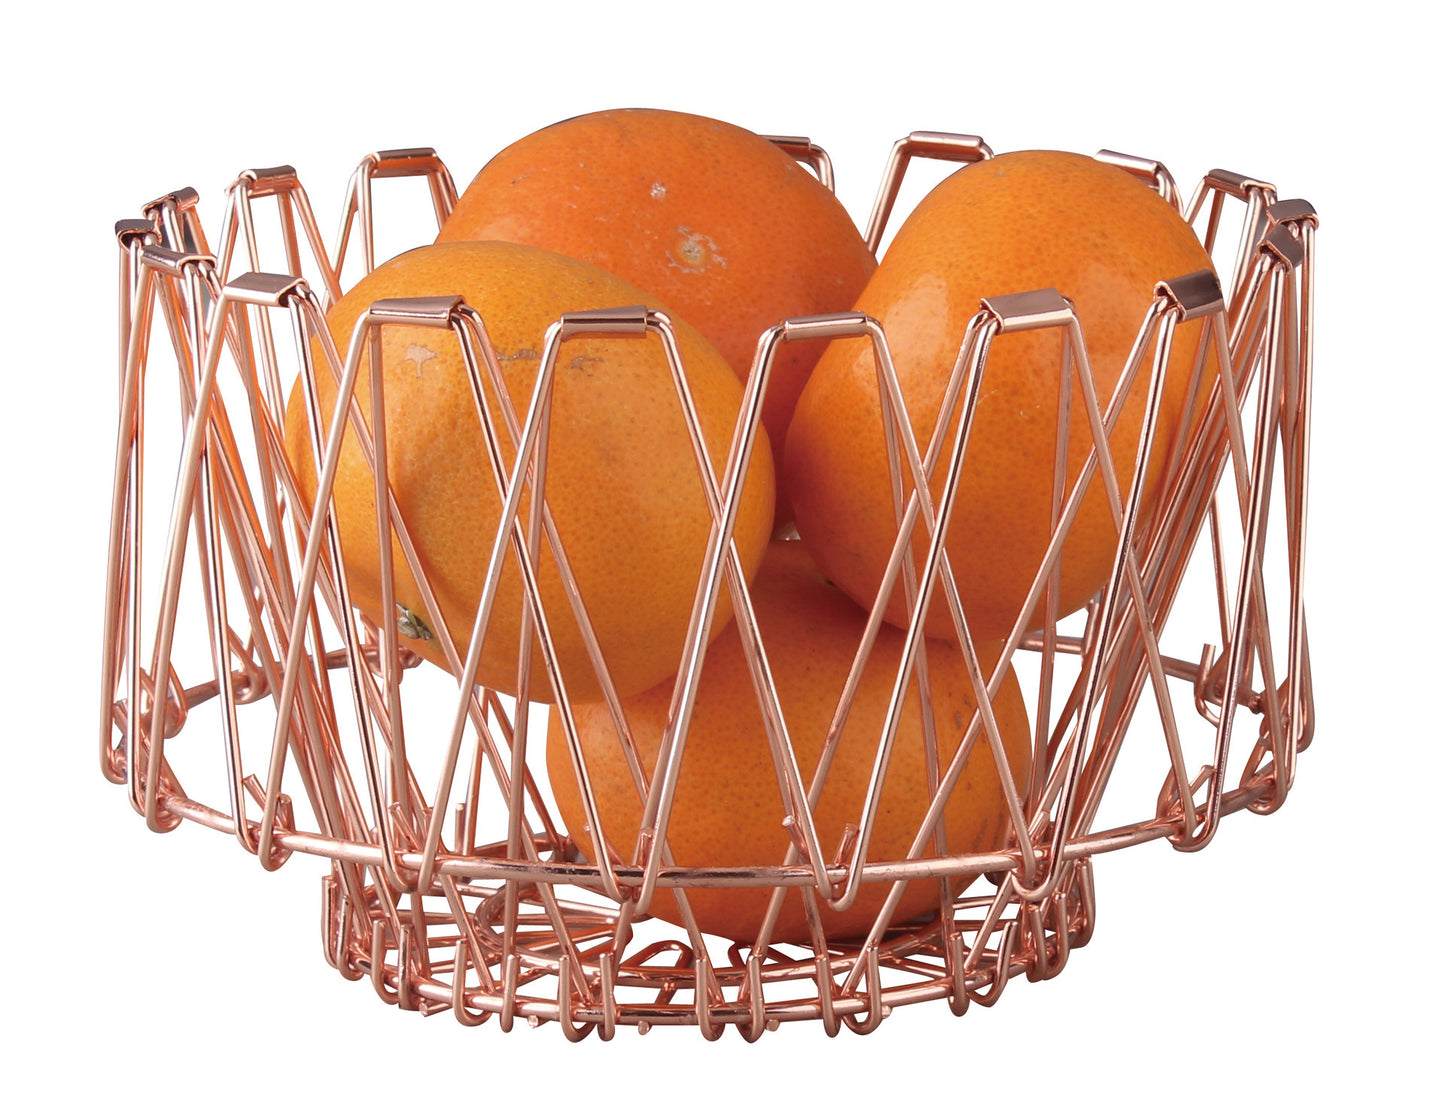 Shape Changing Fruit Basket